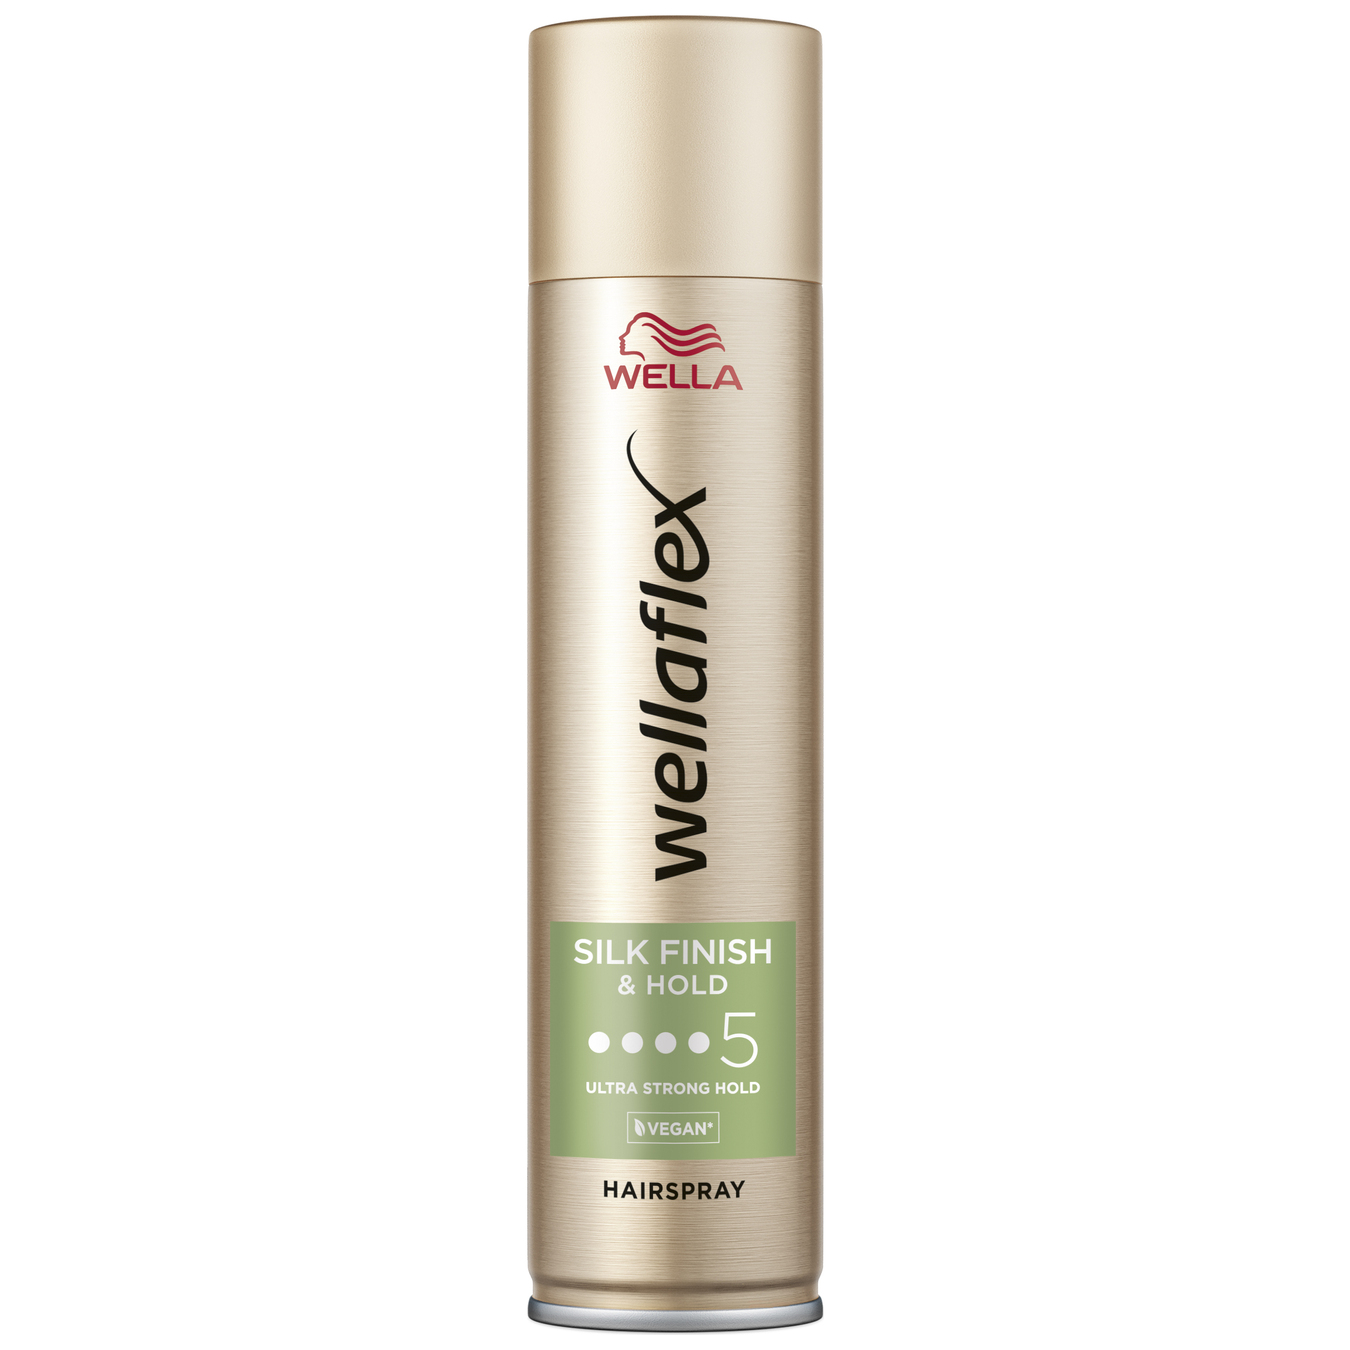 Hairspray WELLAFLEX SILKY LAYING AND FIXATION (5) 250 ml